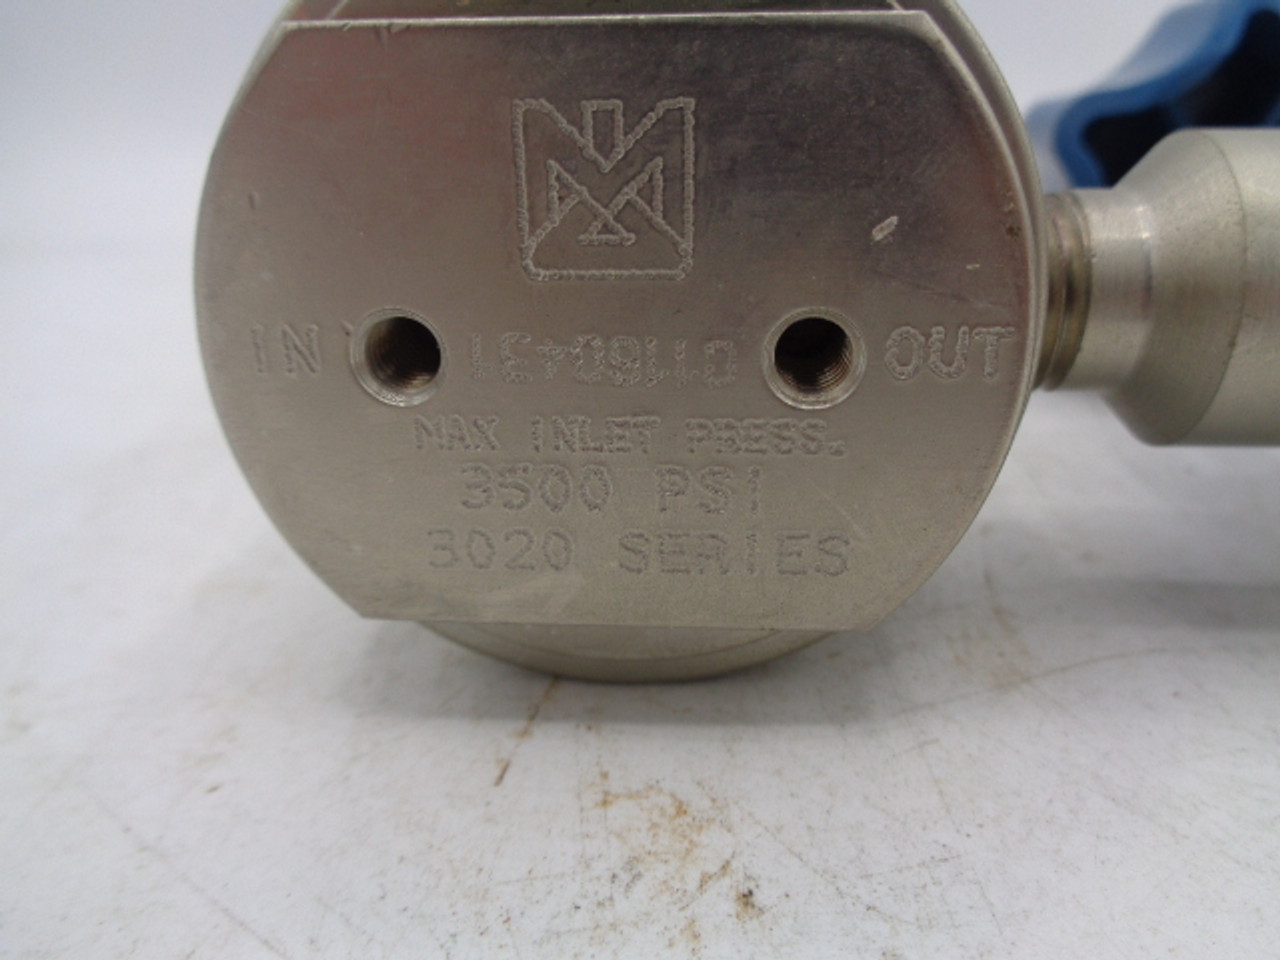 Matheson 3020-N/I Gas Regulator